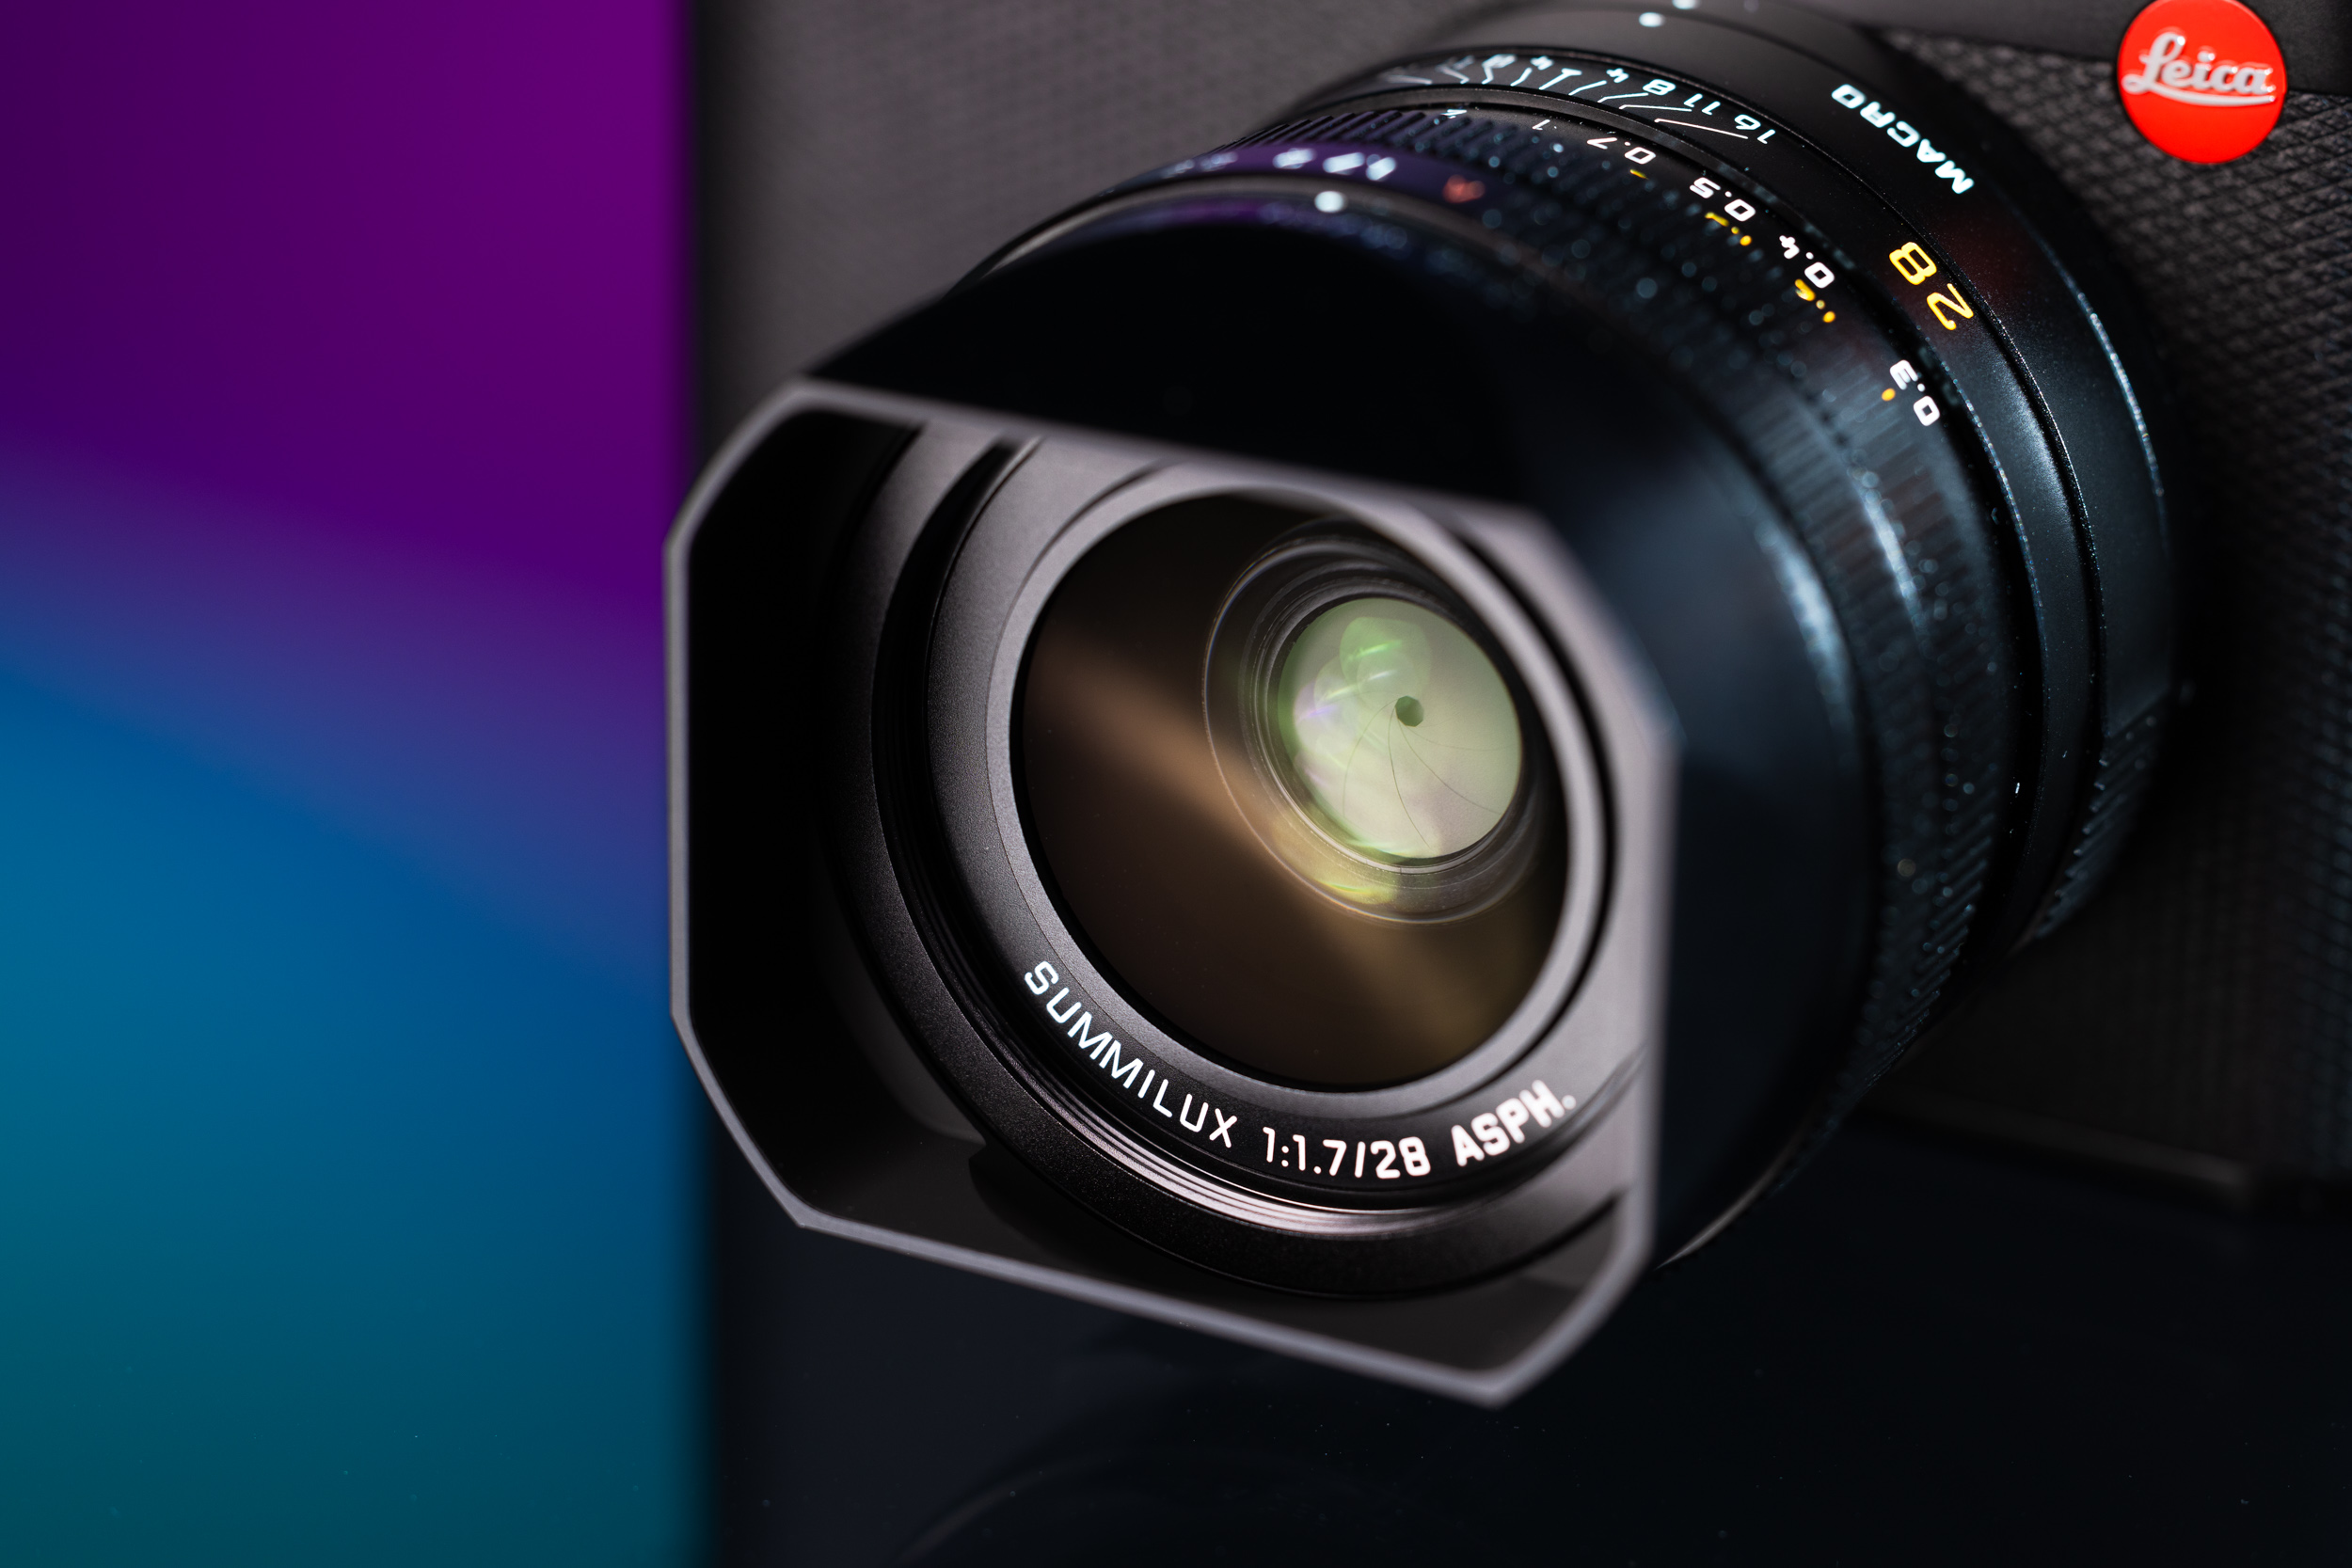 Leica Q3 Full Frame Compact Digital Camera